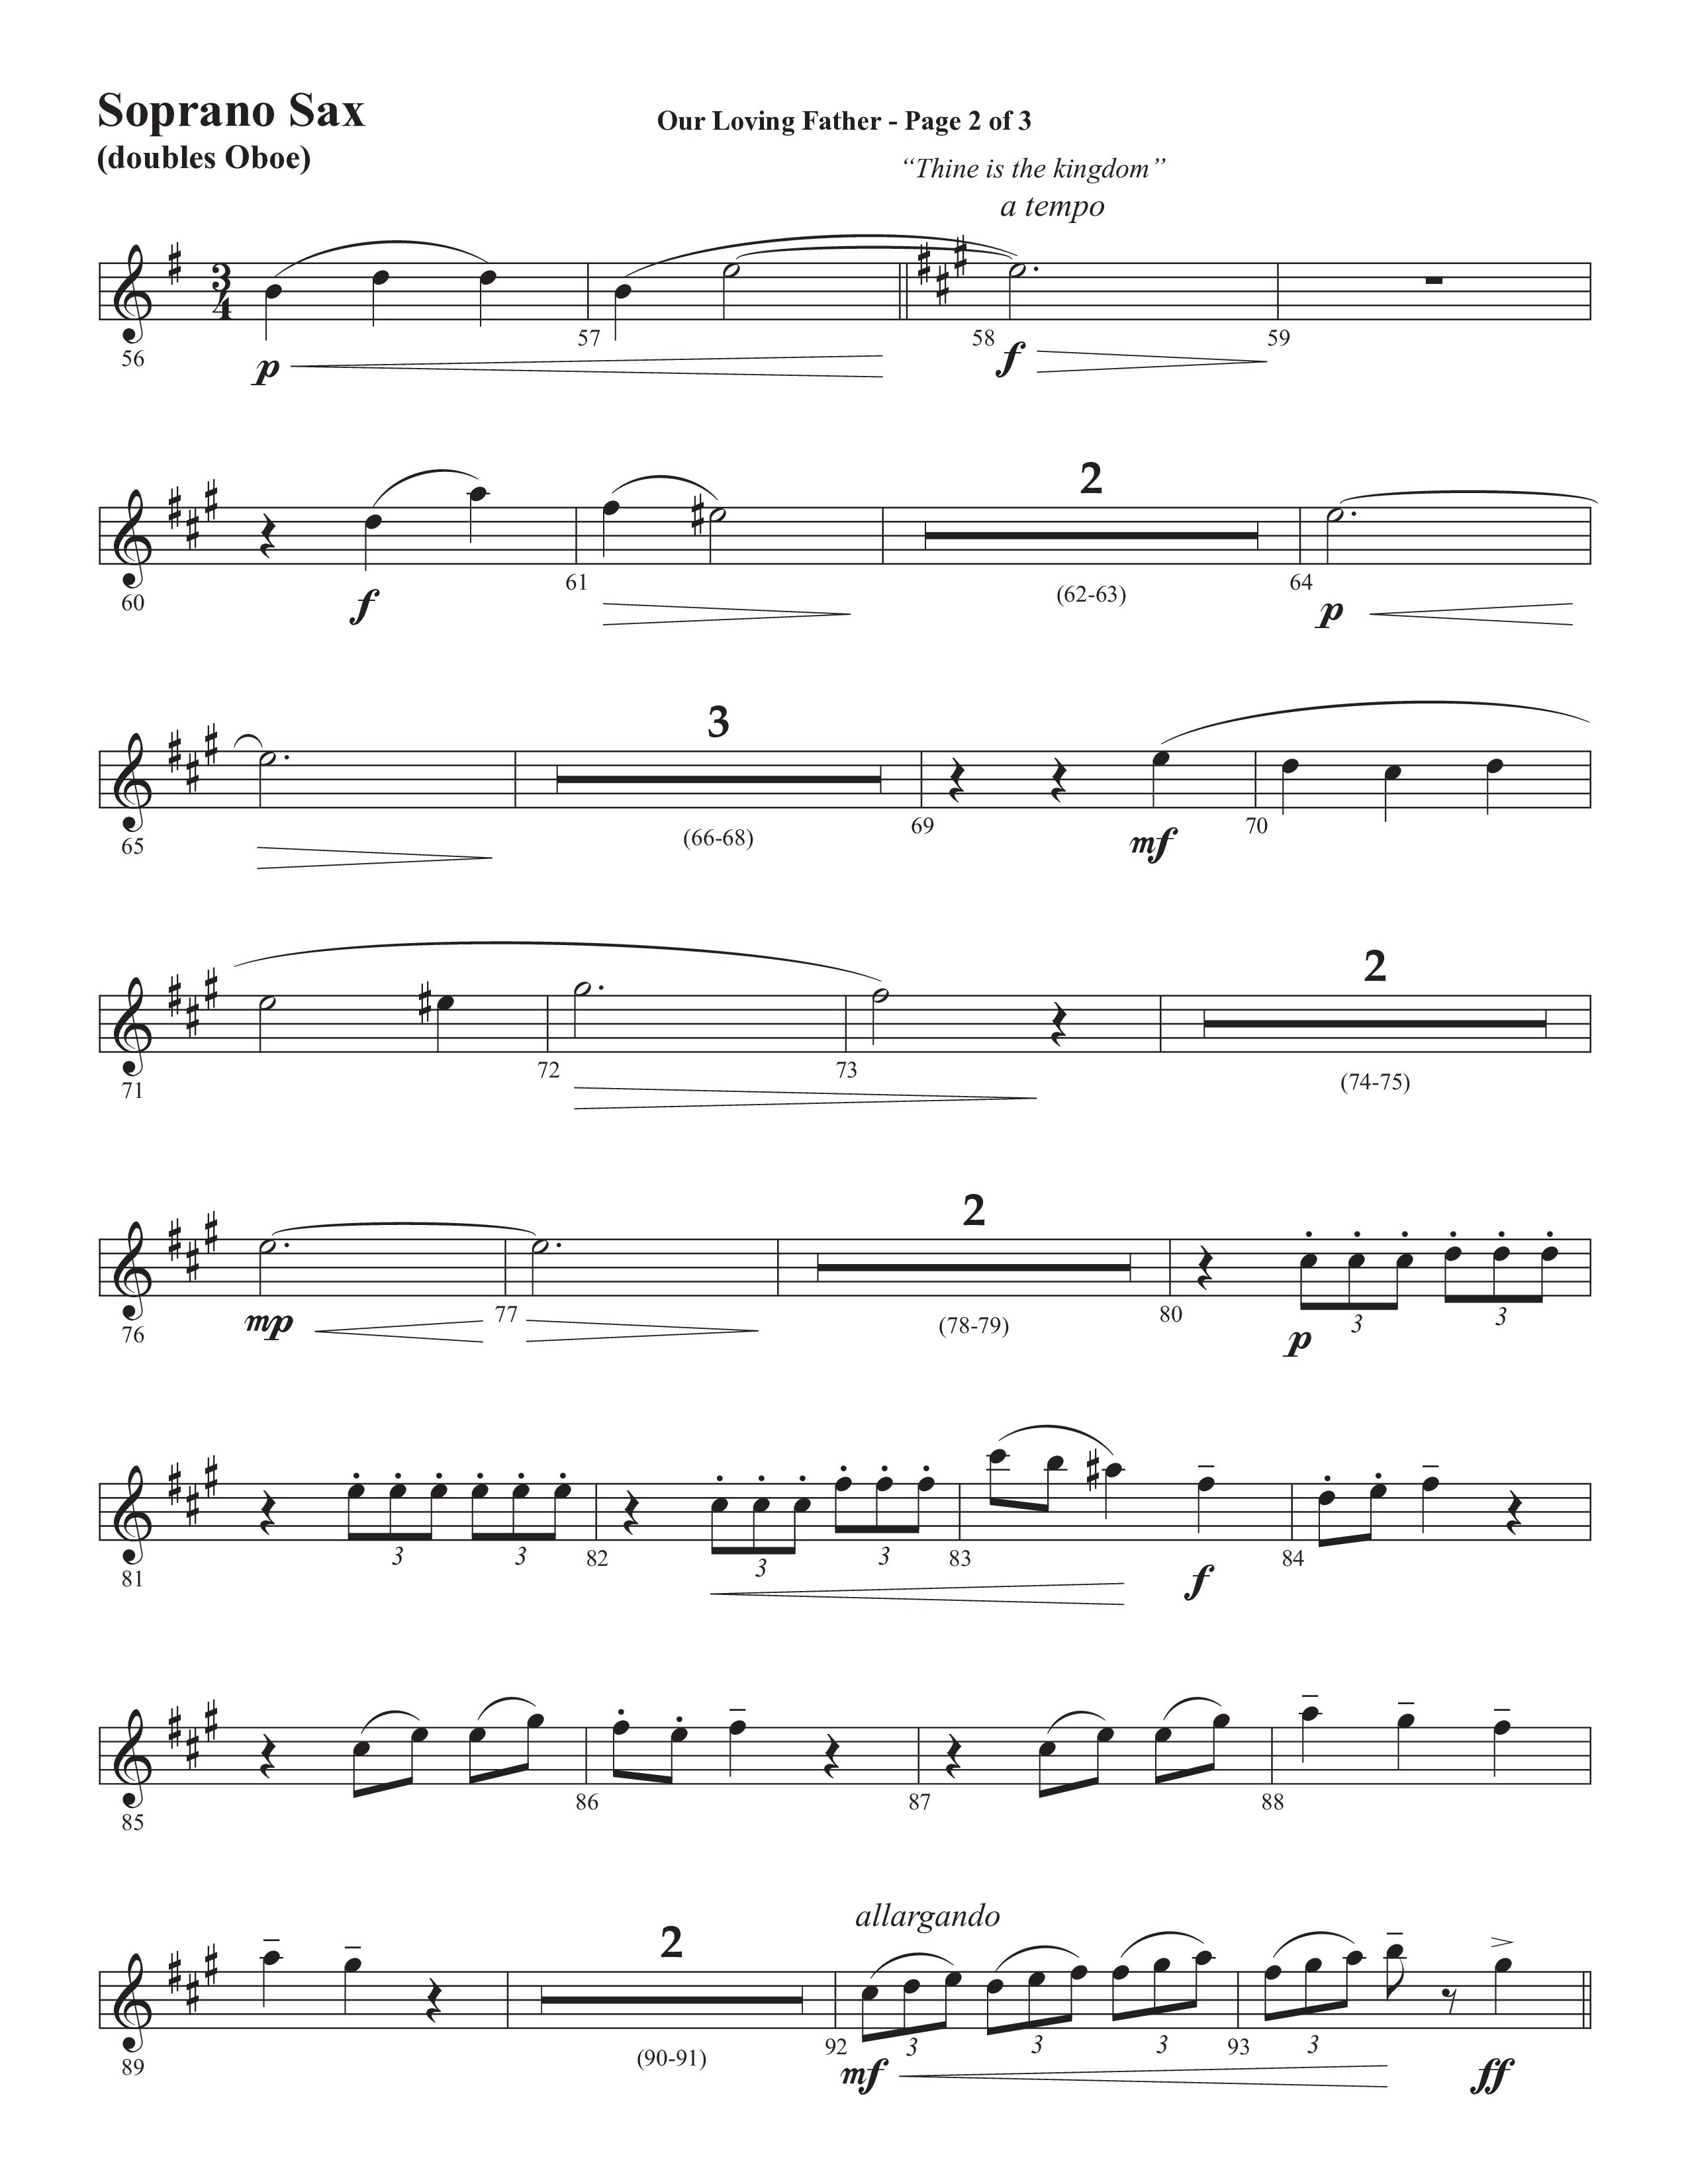 Our Loving Father (Choral Anthem SATB) Soprano Sax (Semsen Music / Arr. Phillip Keveren)